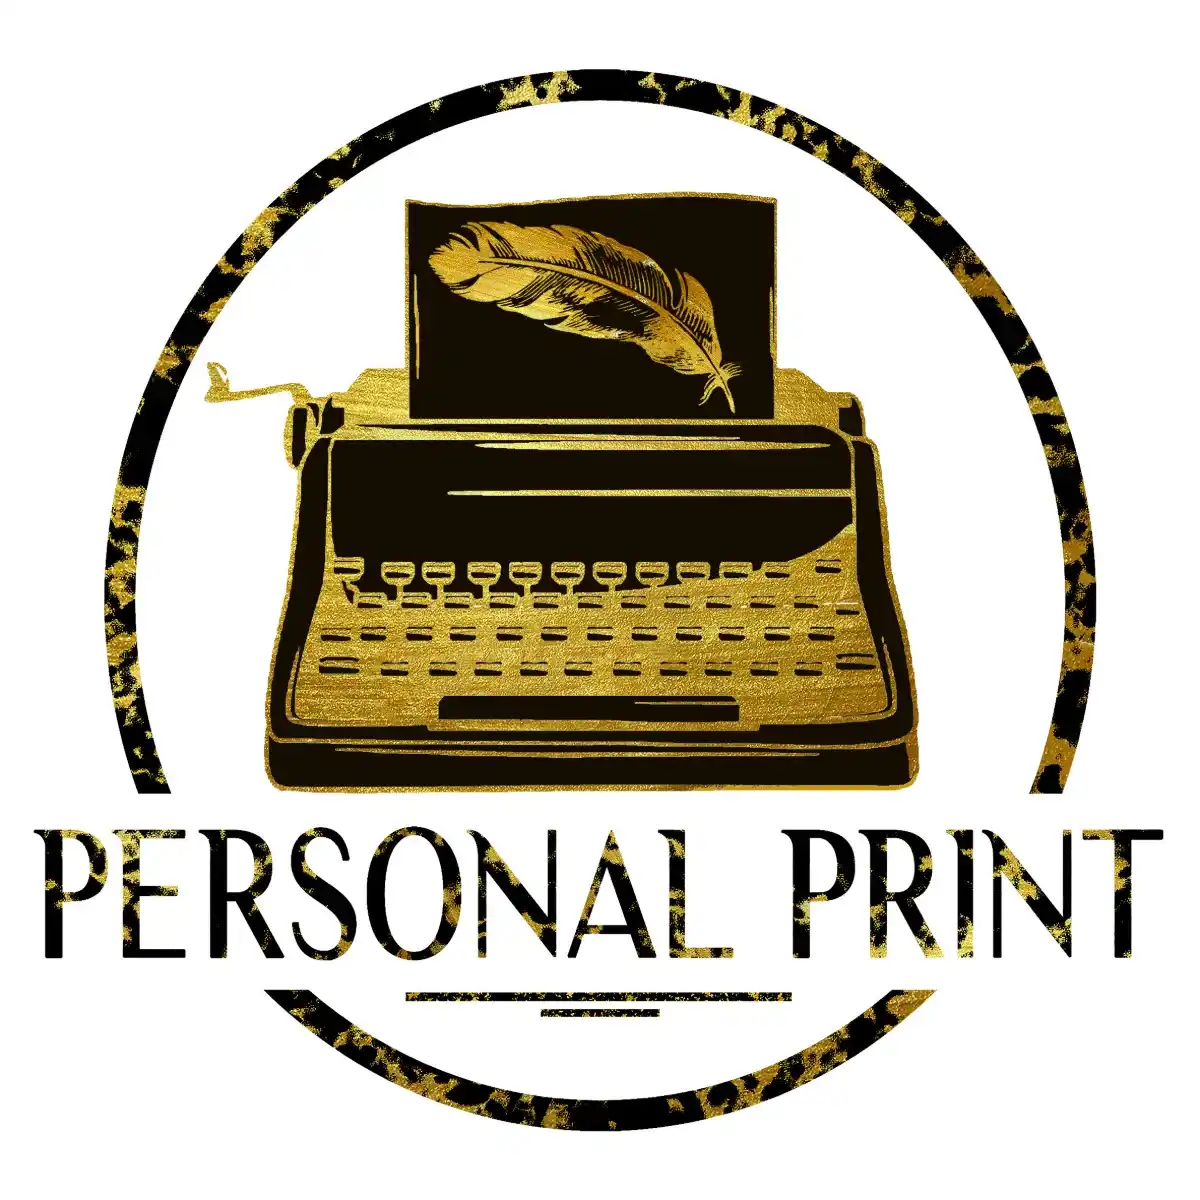 Personal Print